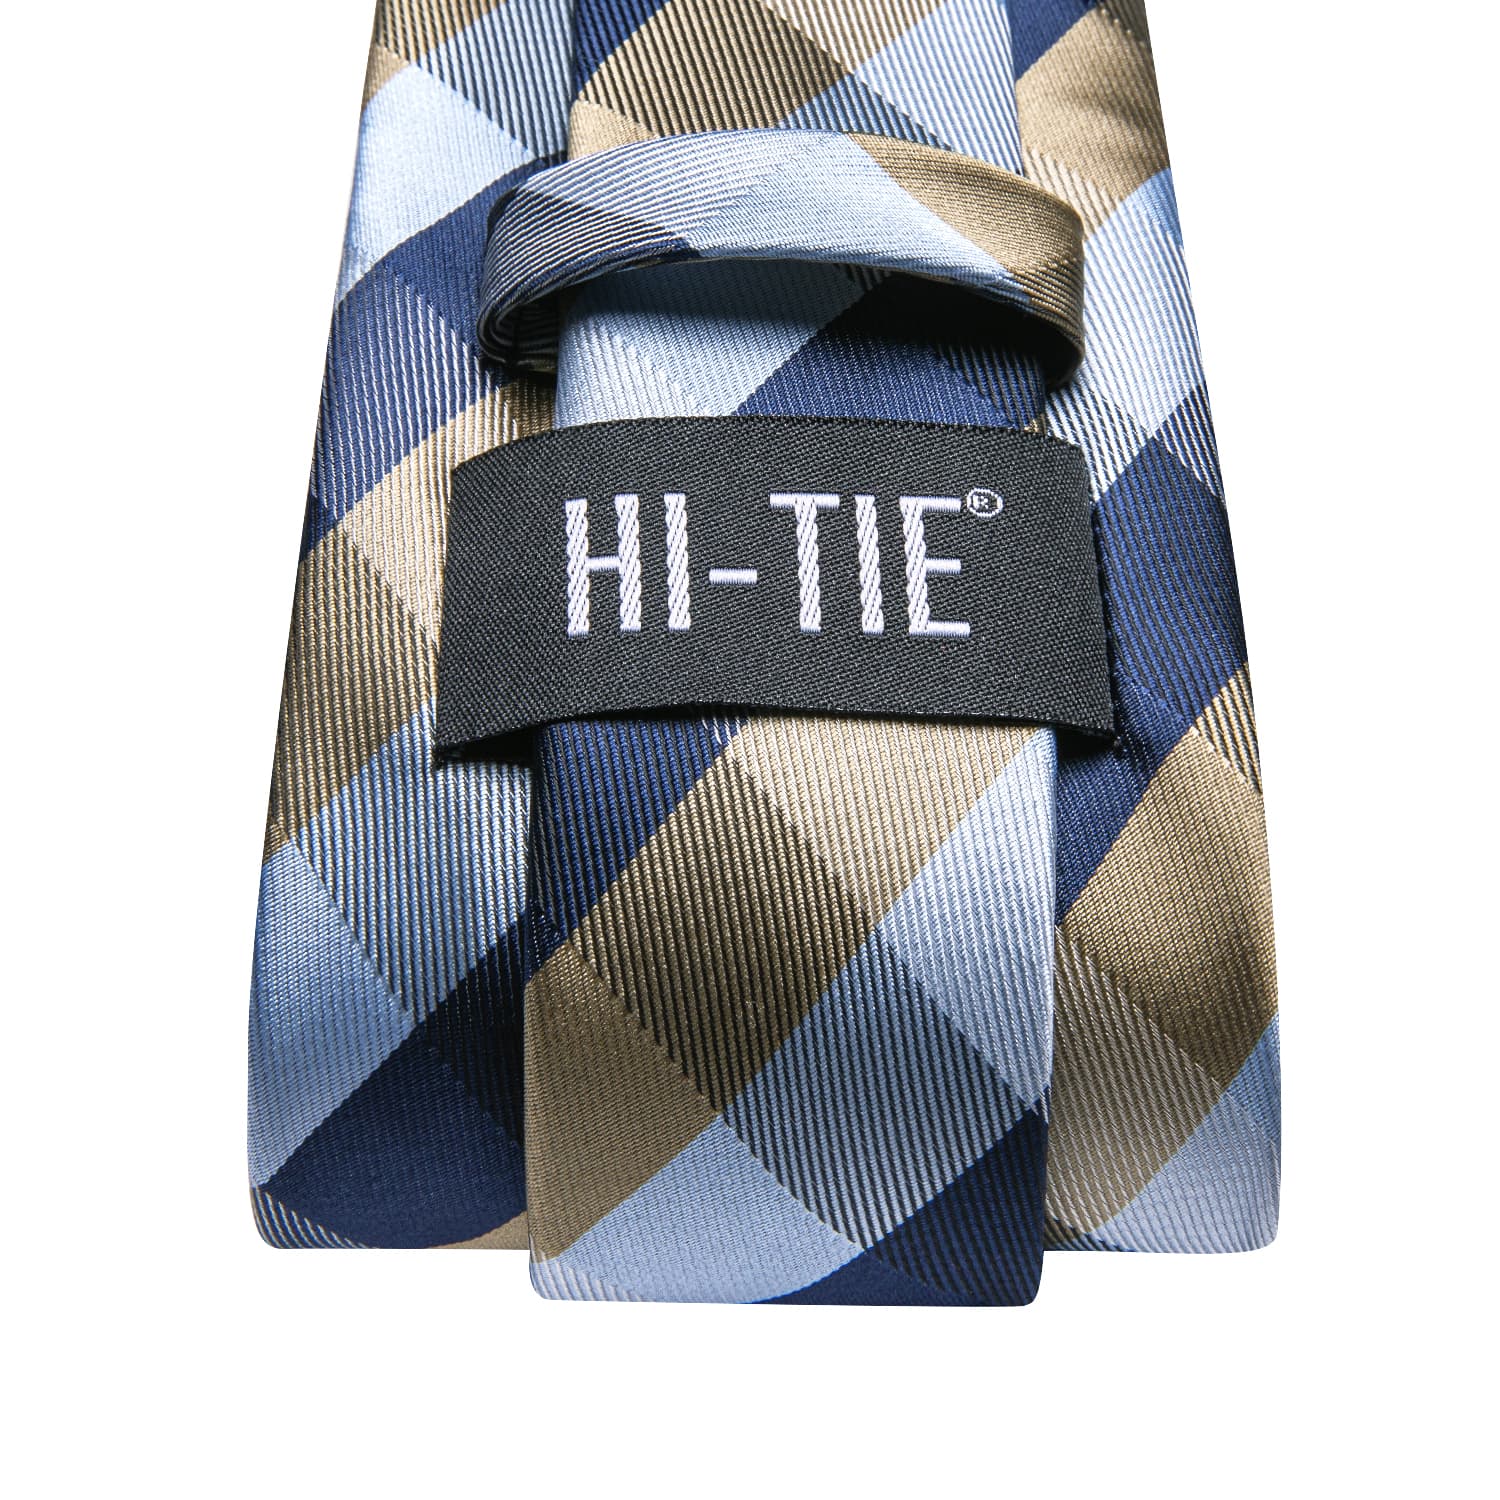 Hi-Tie Plaid Tie Navy Blue Sky Blue Silk Necktie for Men